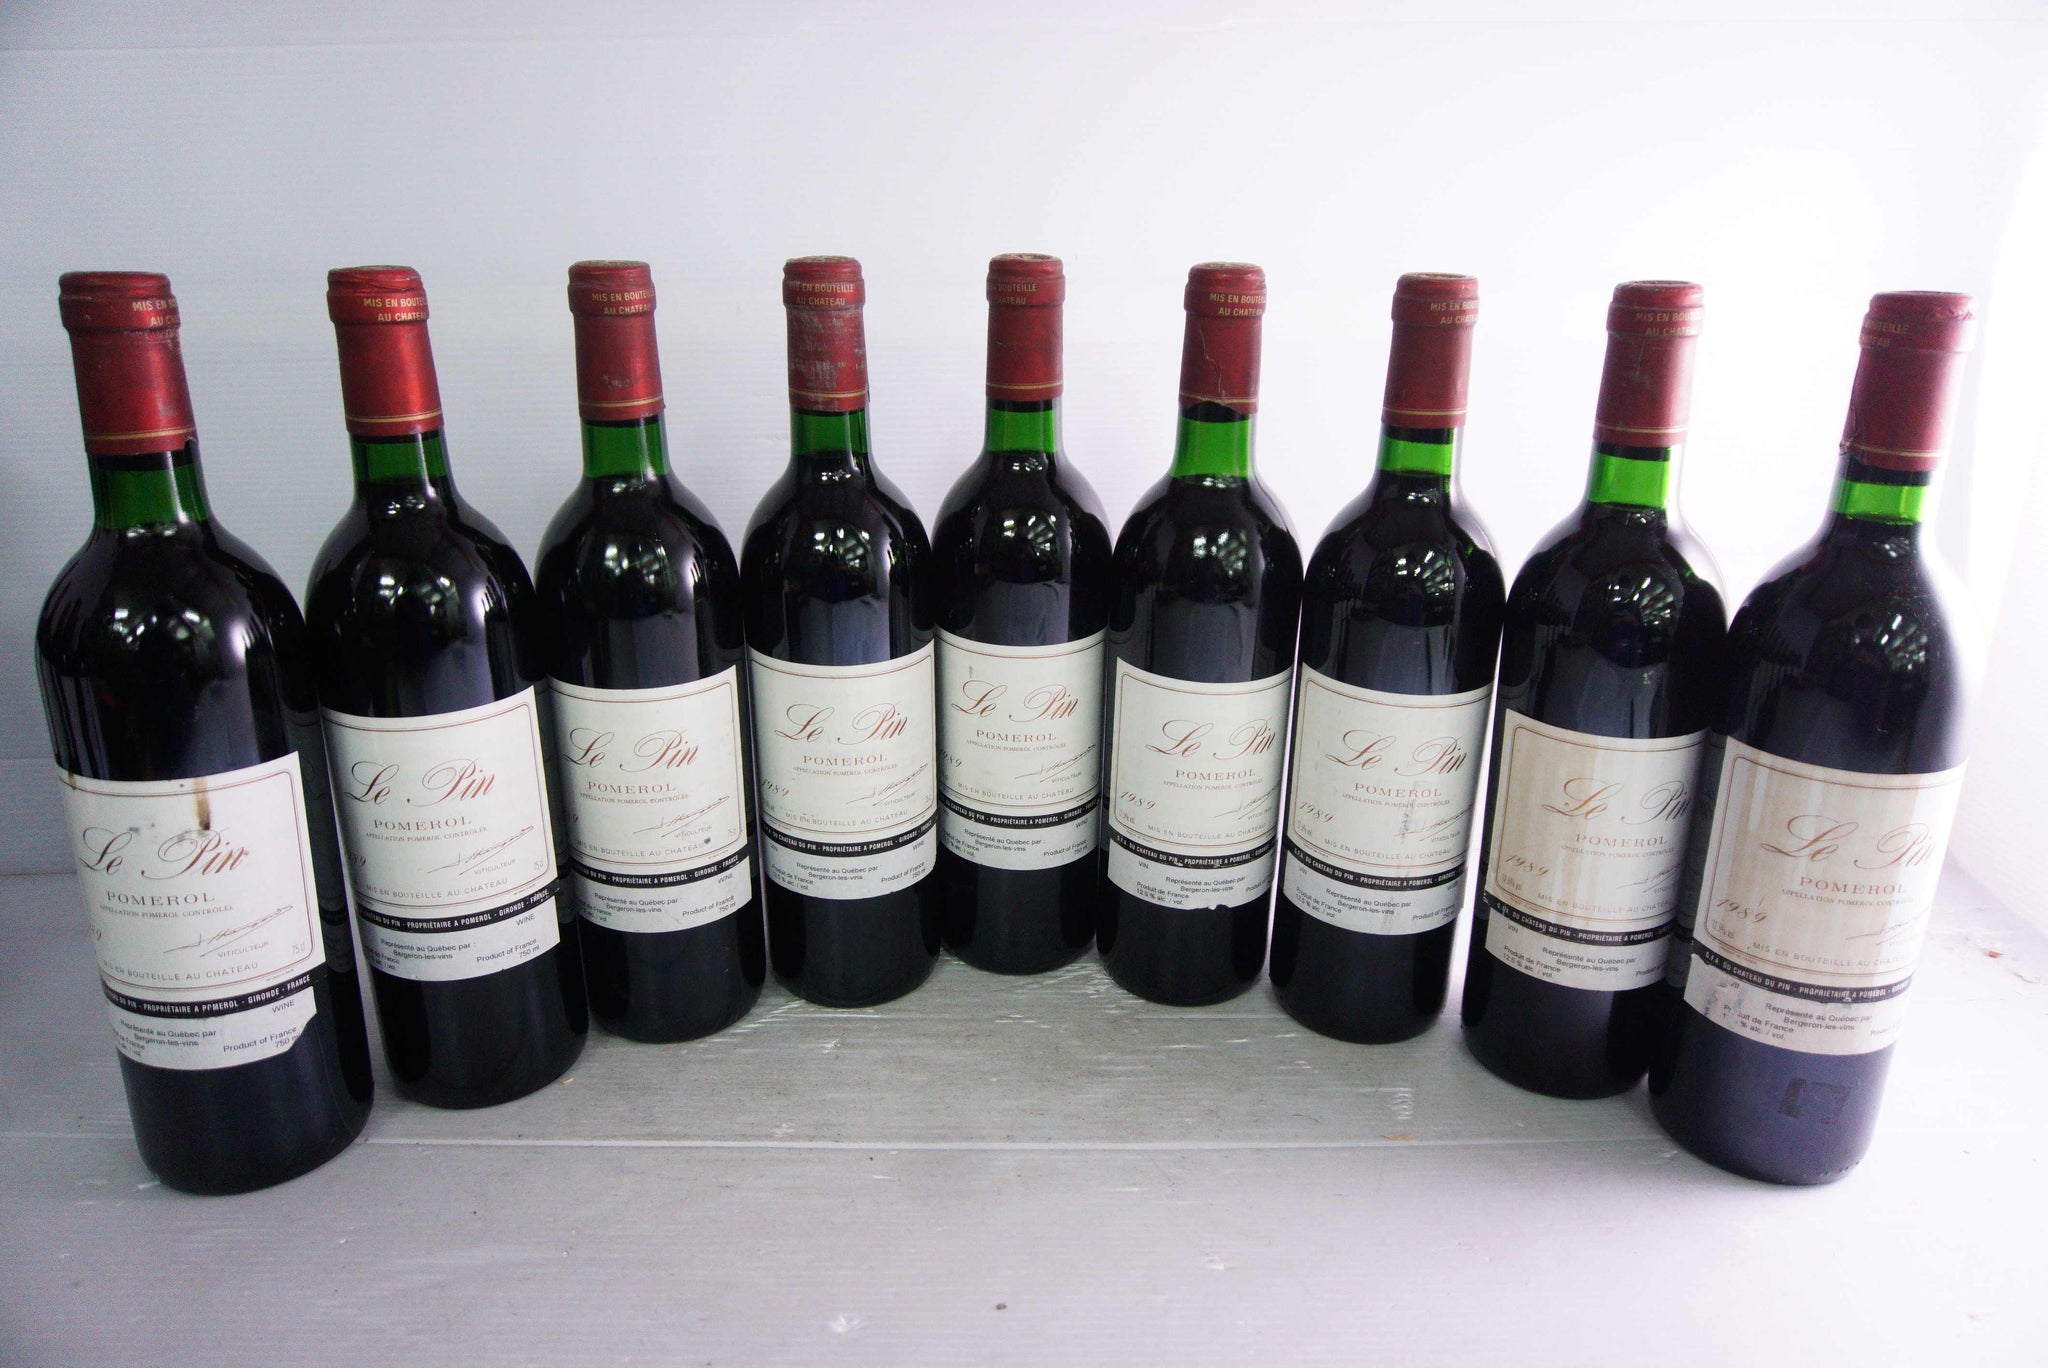 1989 red wine